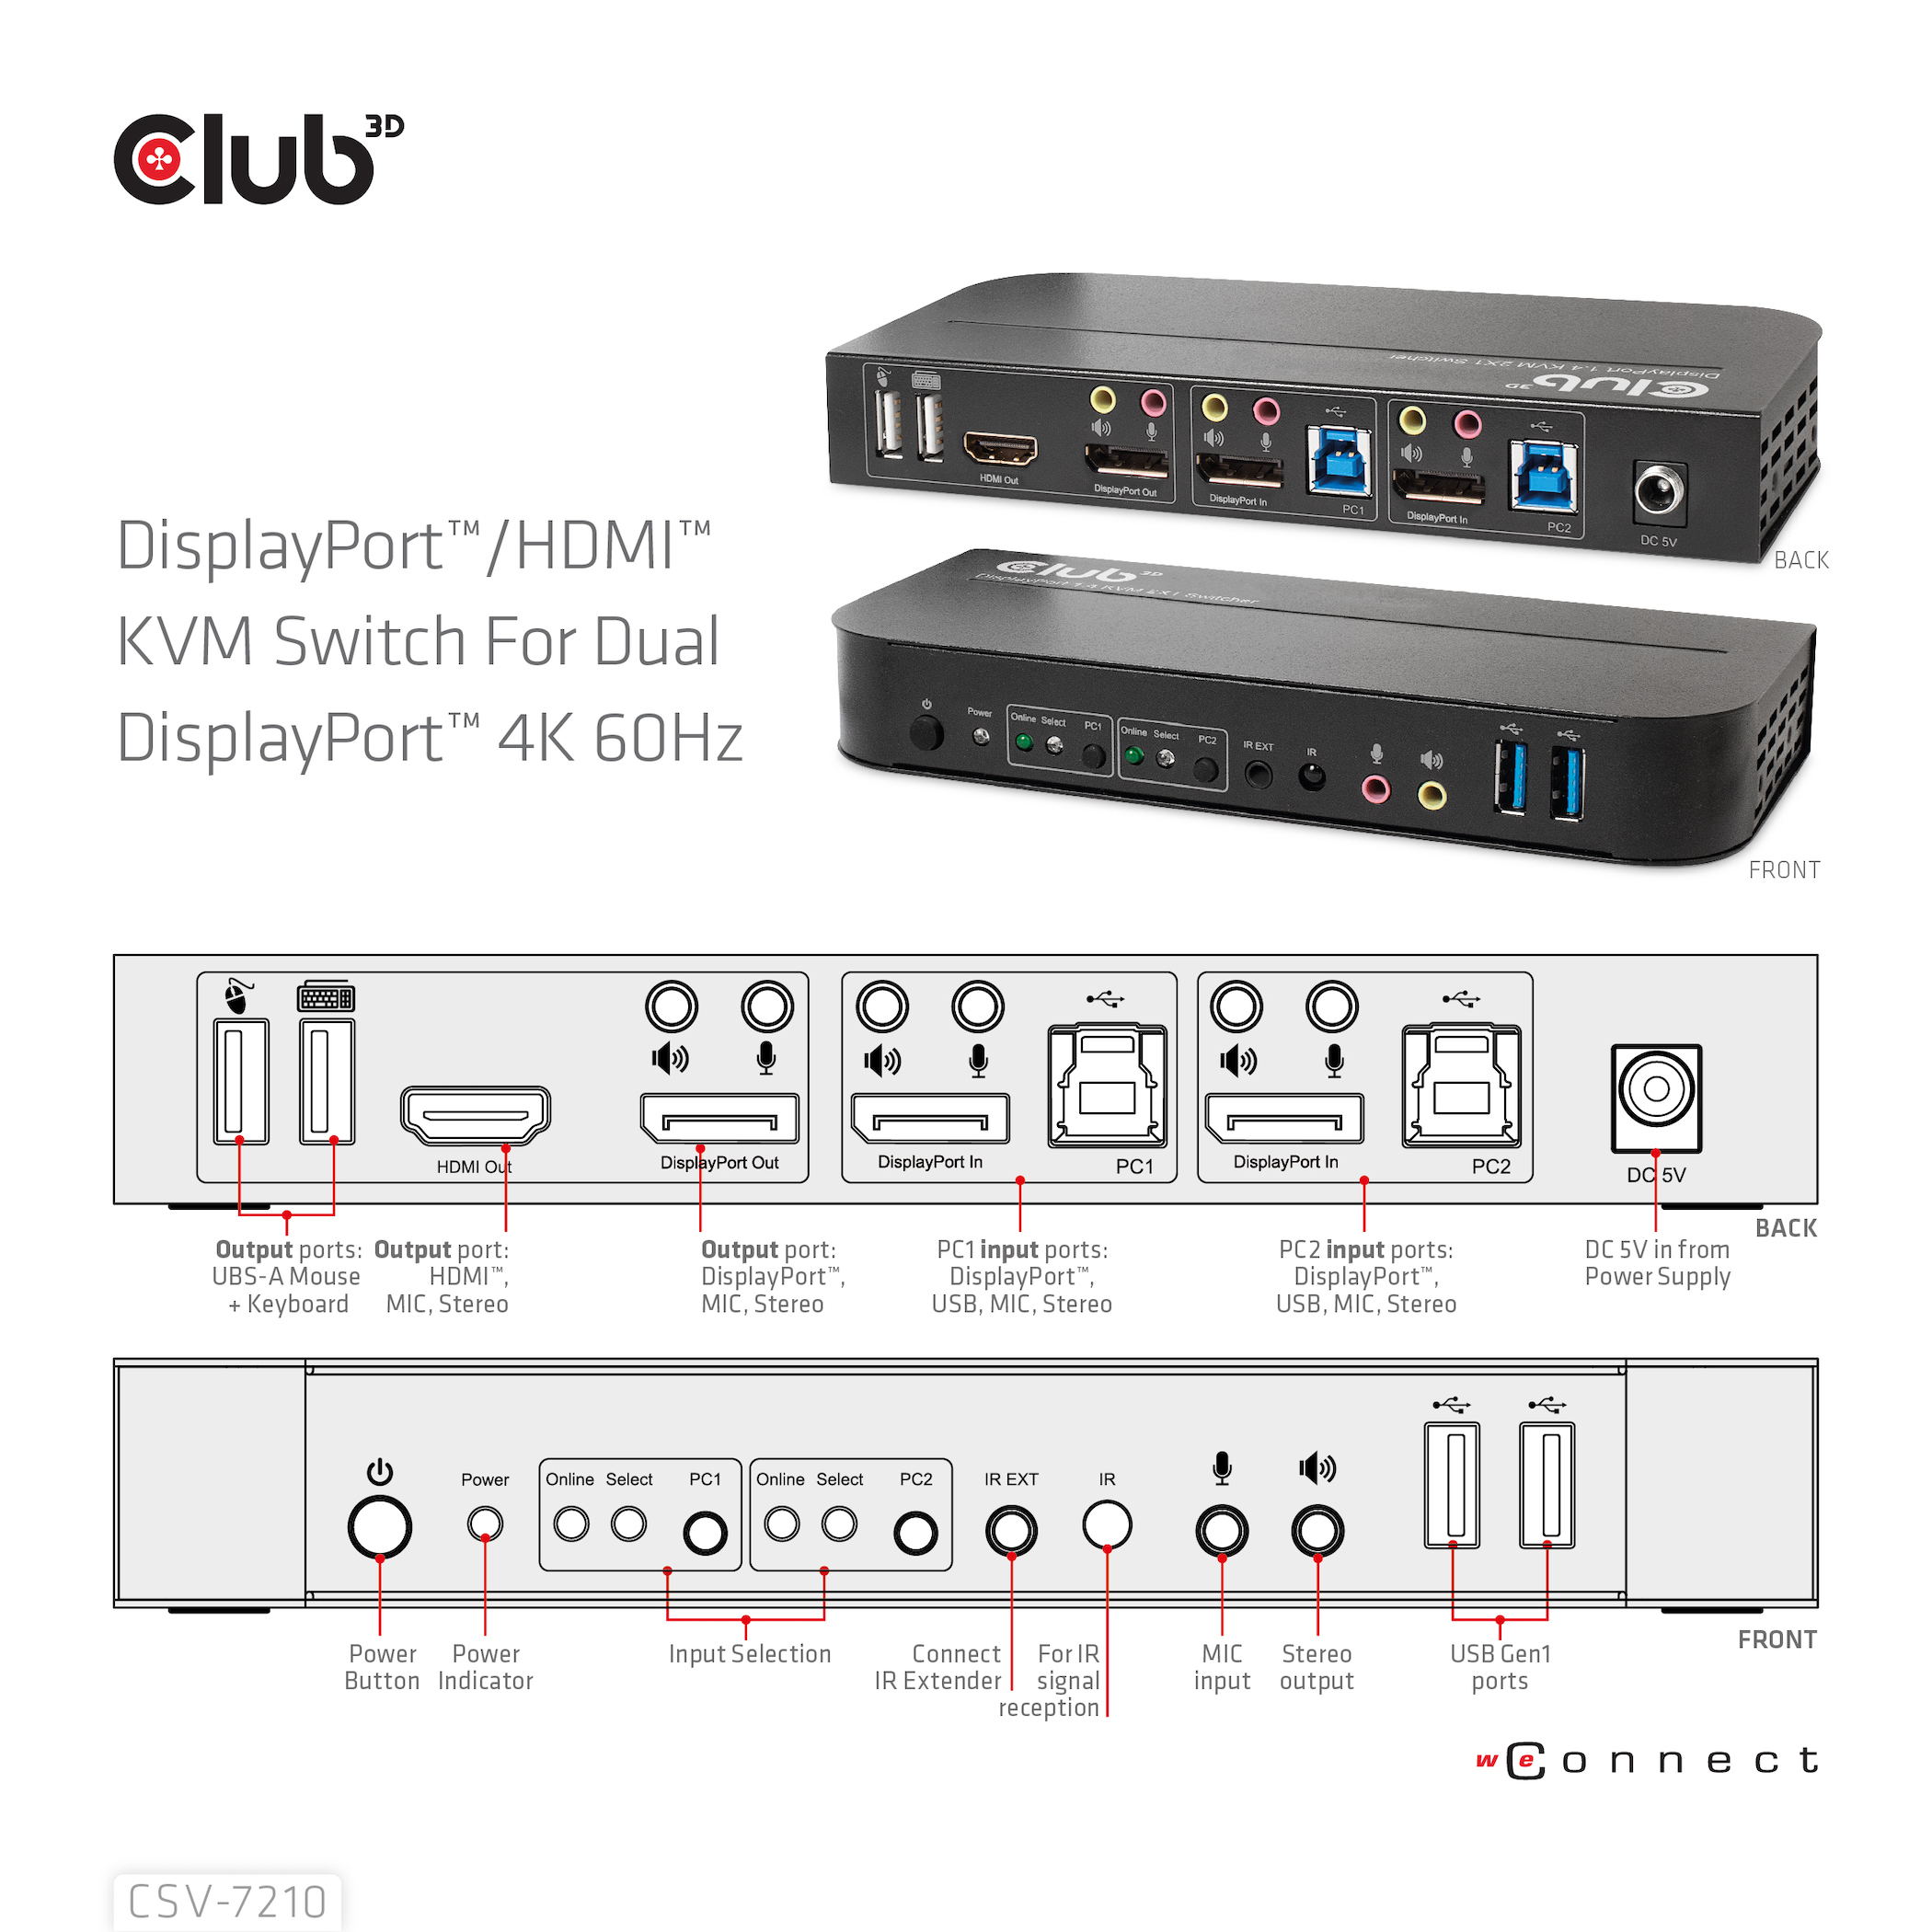 DISPLAYPORT /HDMI KVM SWITCH FOR DUAL DISPLAYPORT 4K60HZ